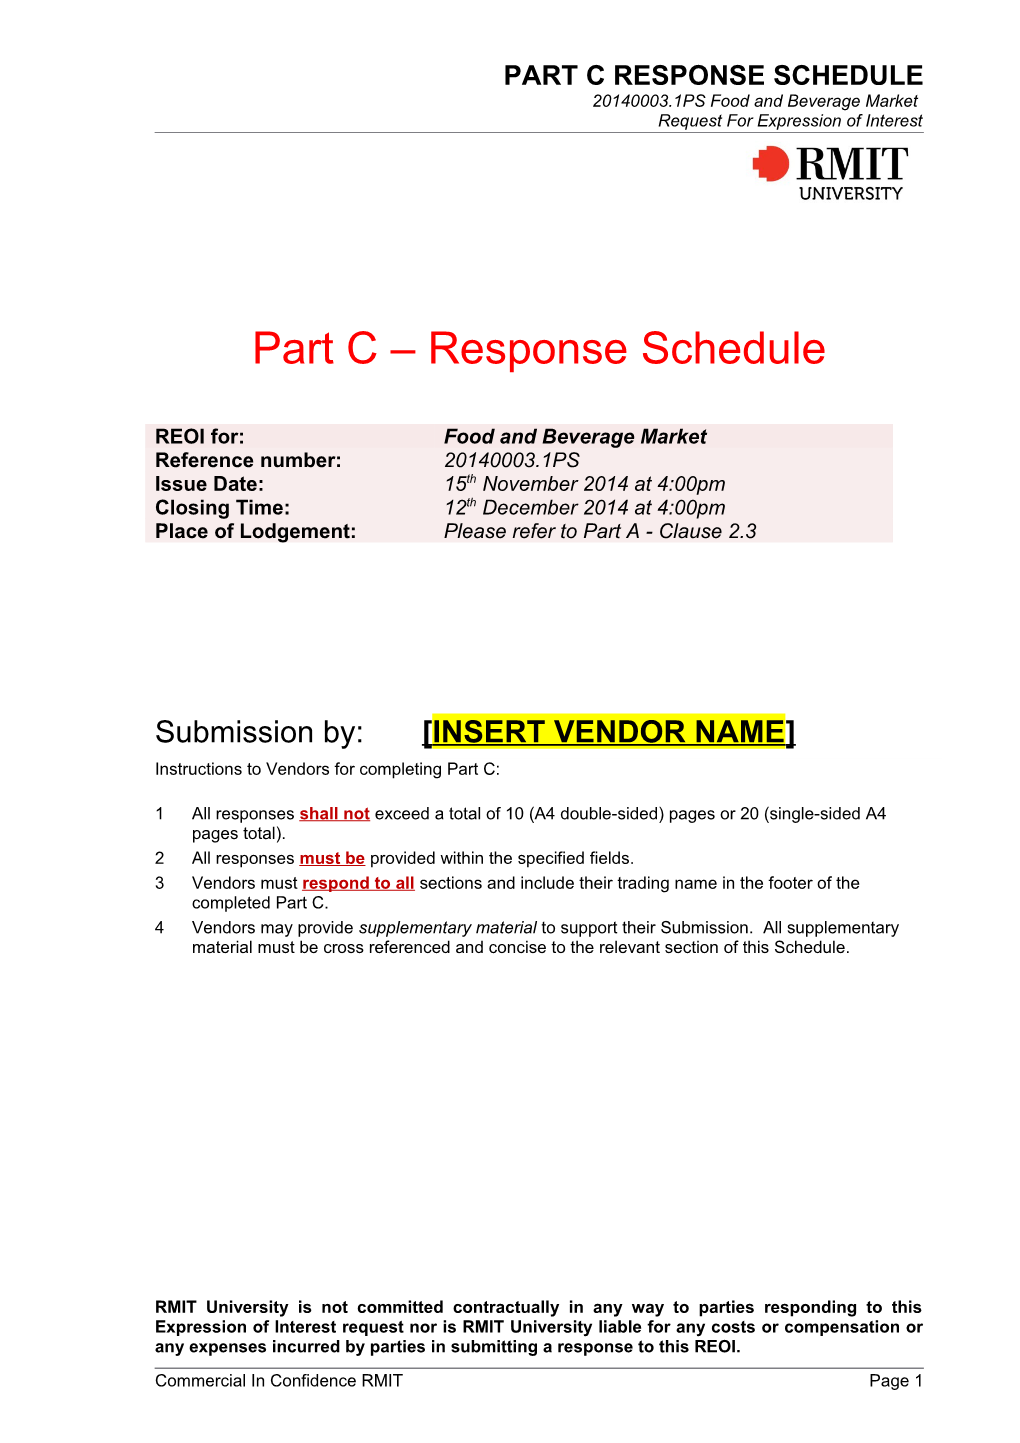 Part C Response Schedule